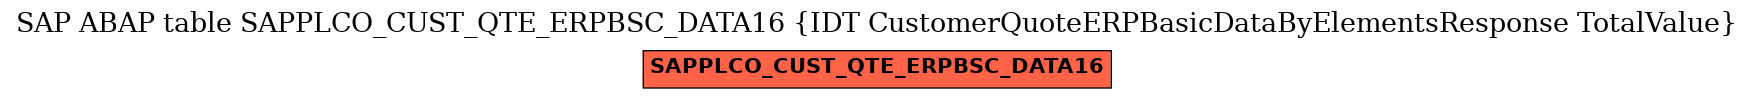 E-R Diagram for table SAPPLCO_CUST_QTE_ERPBSC_DATA16 (IDT CustomerQuoteERPBasicDataByElementsResponse TotalValue)